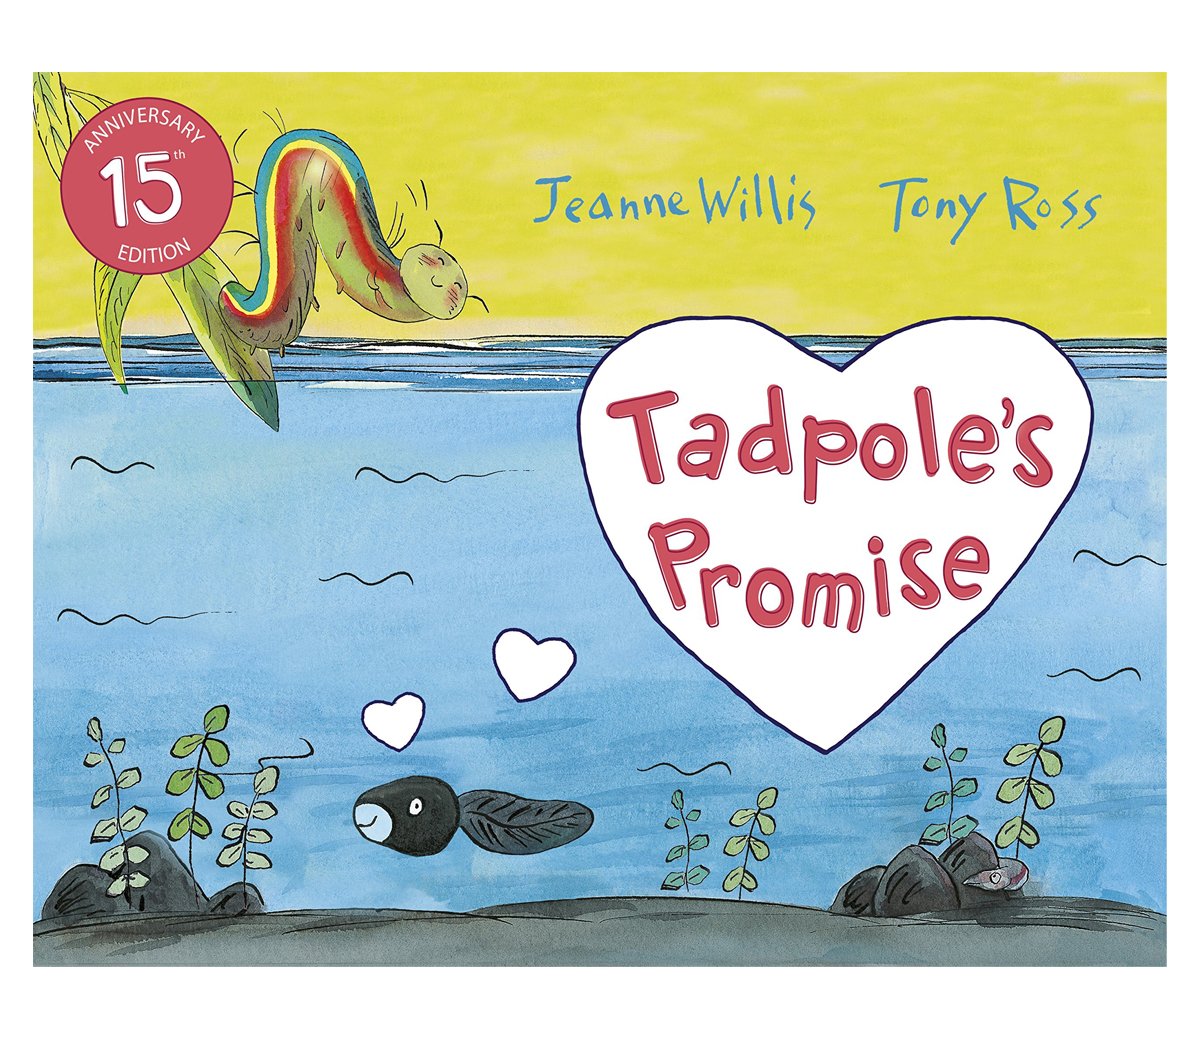 jeanne-willis-tadpoles-promise.jpg